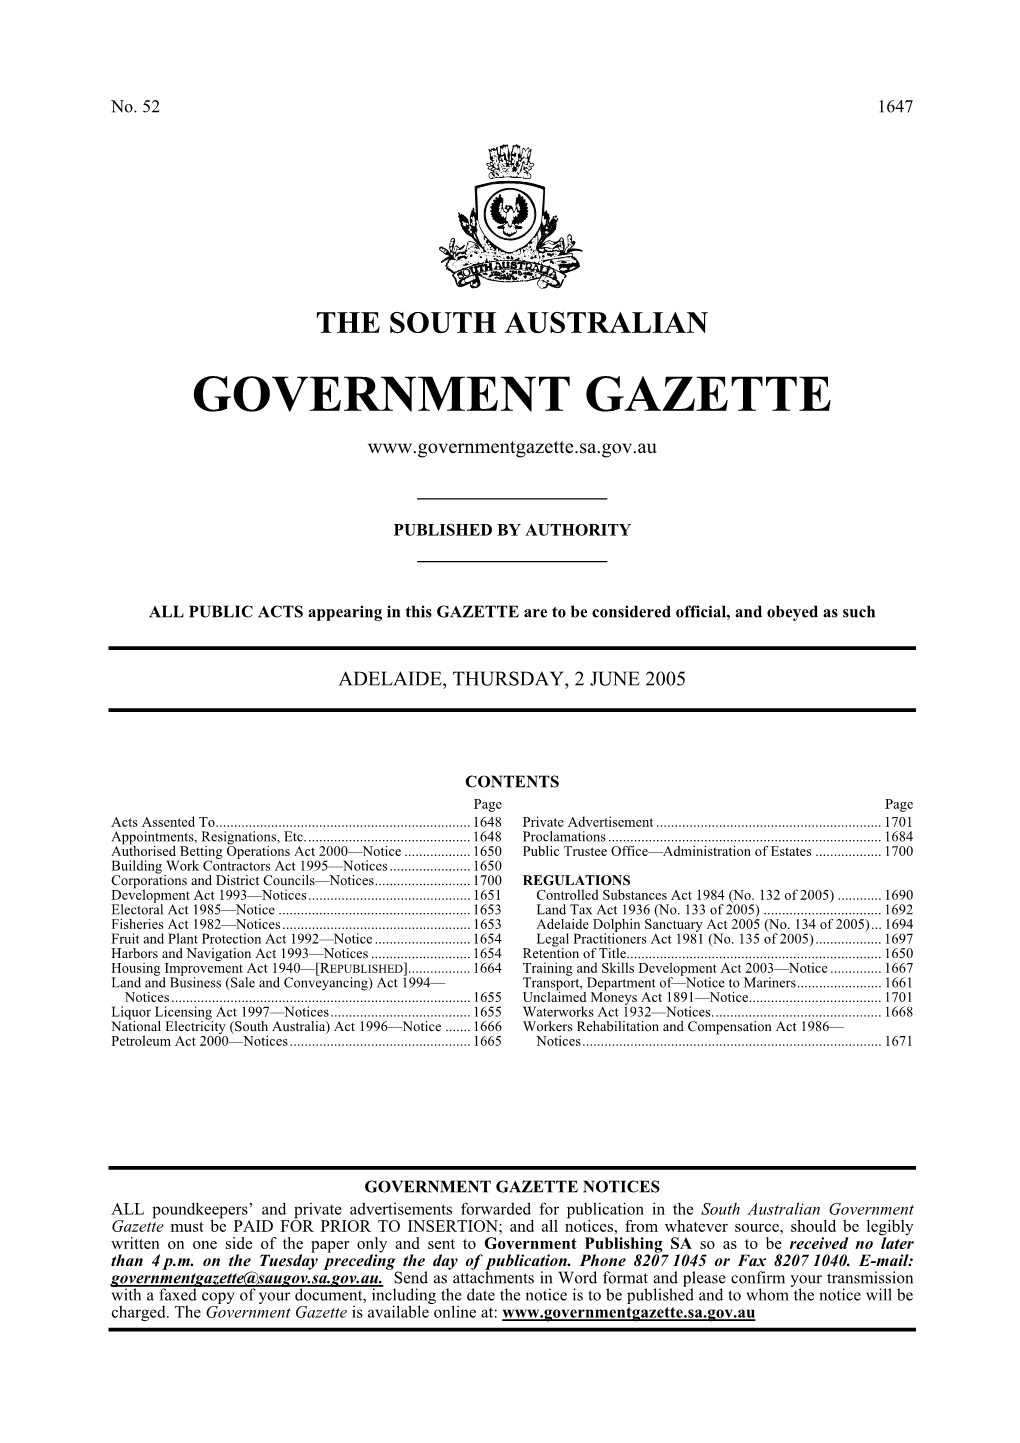 Adelaide Dolphin Sanctuary Act 2005 (No